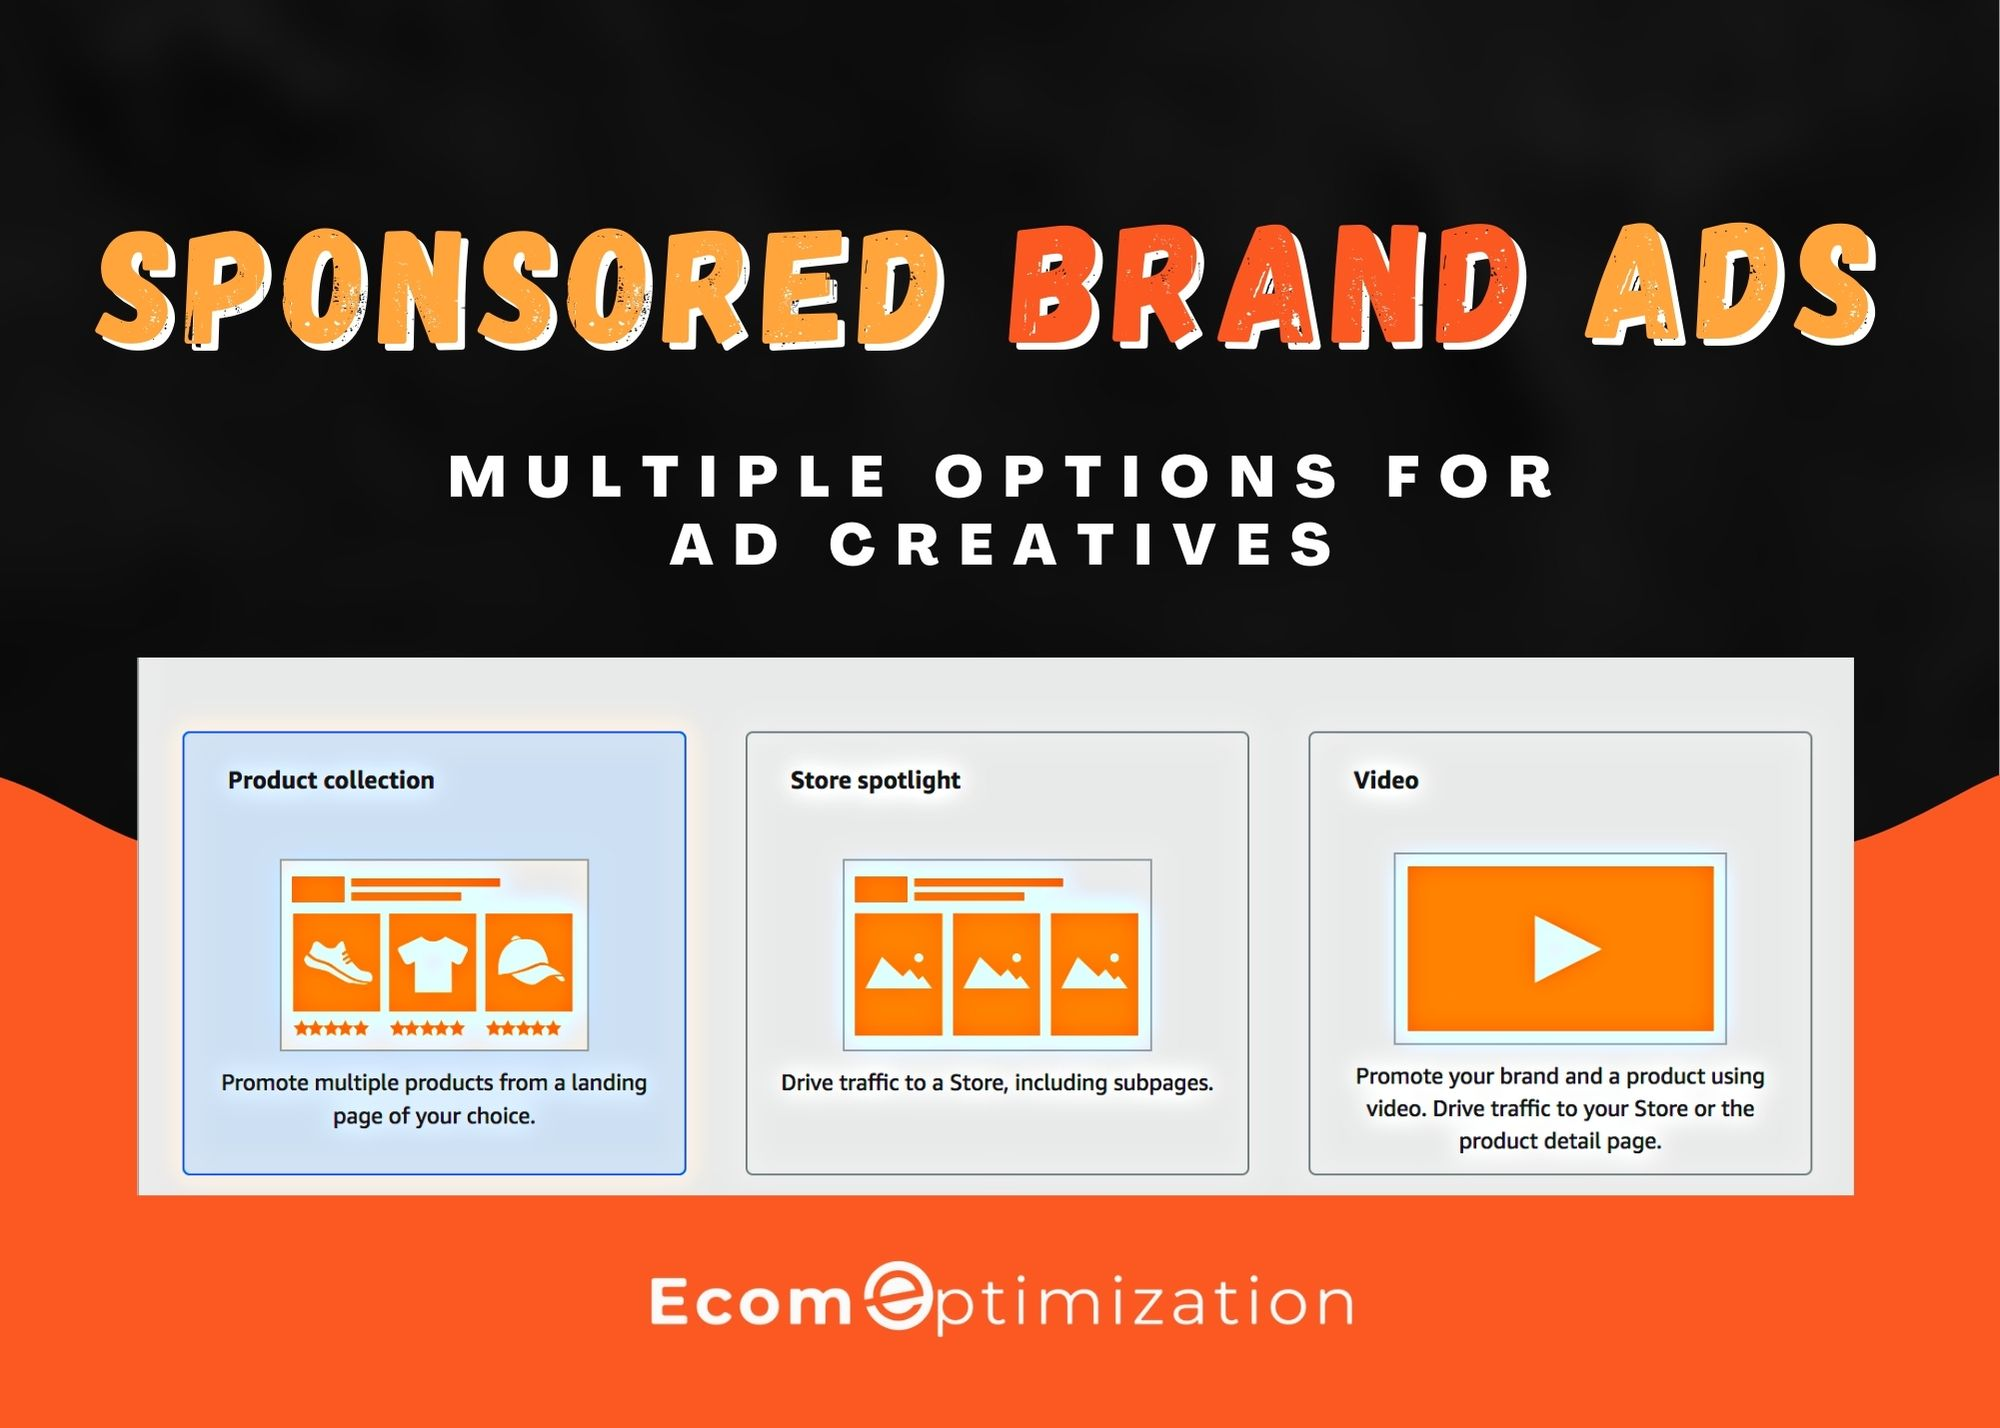 Sponsored Brand Ads has 3 Creatives Options